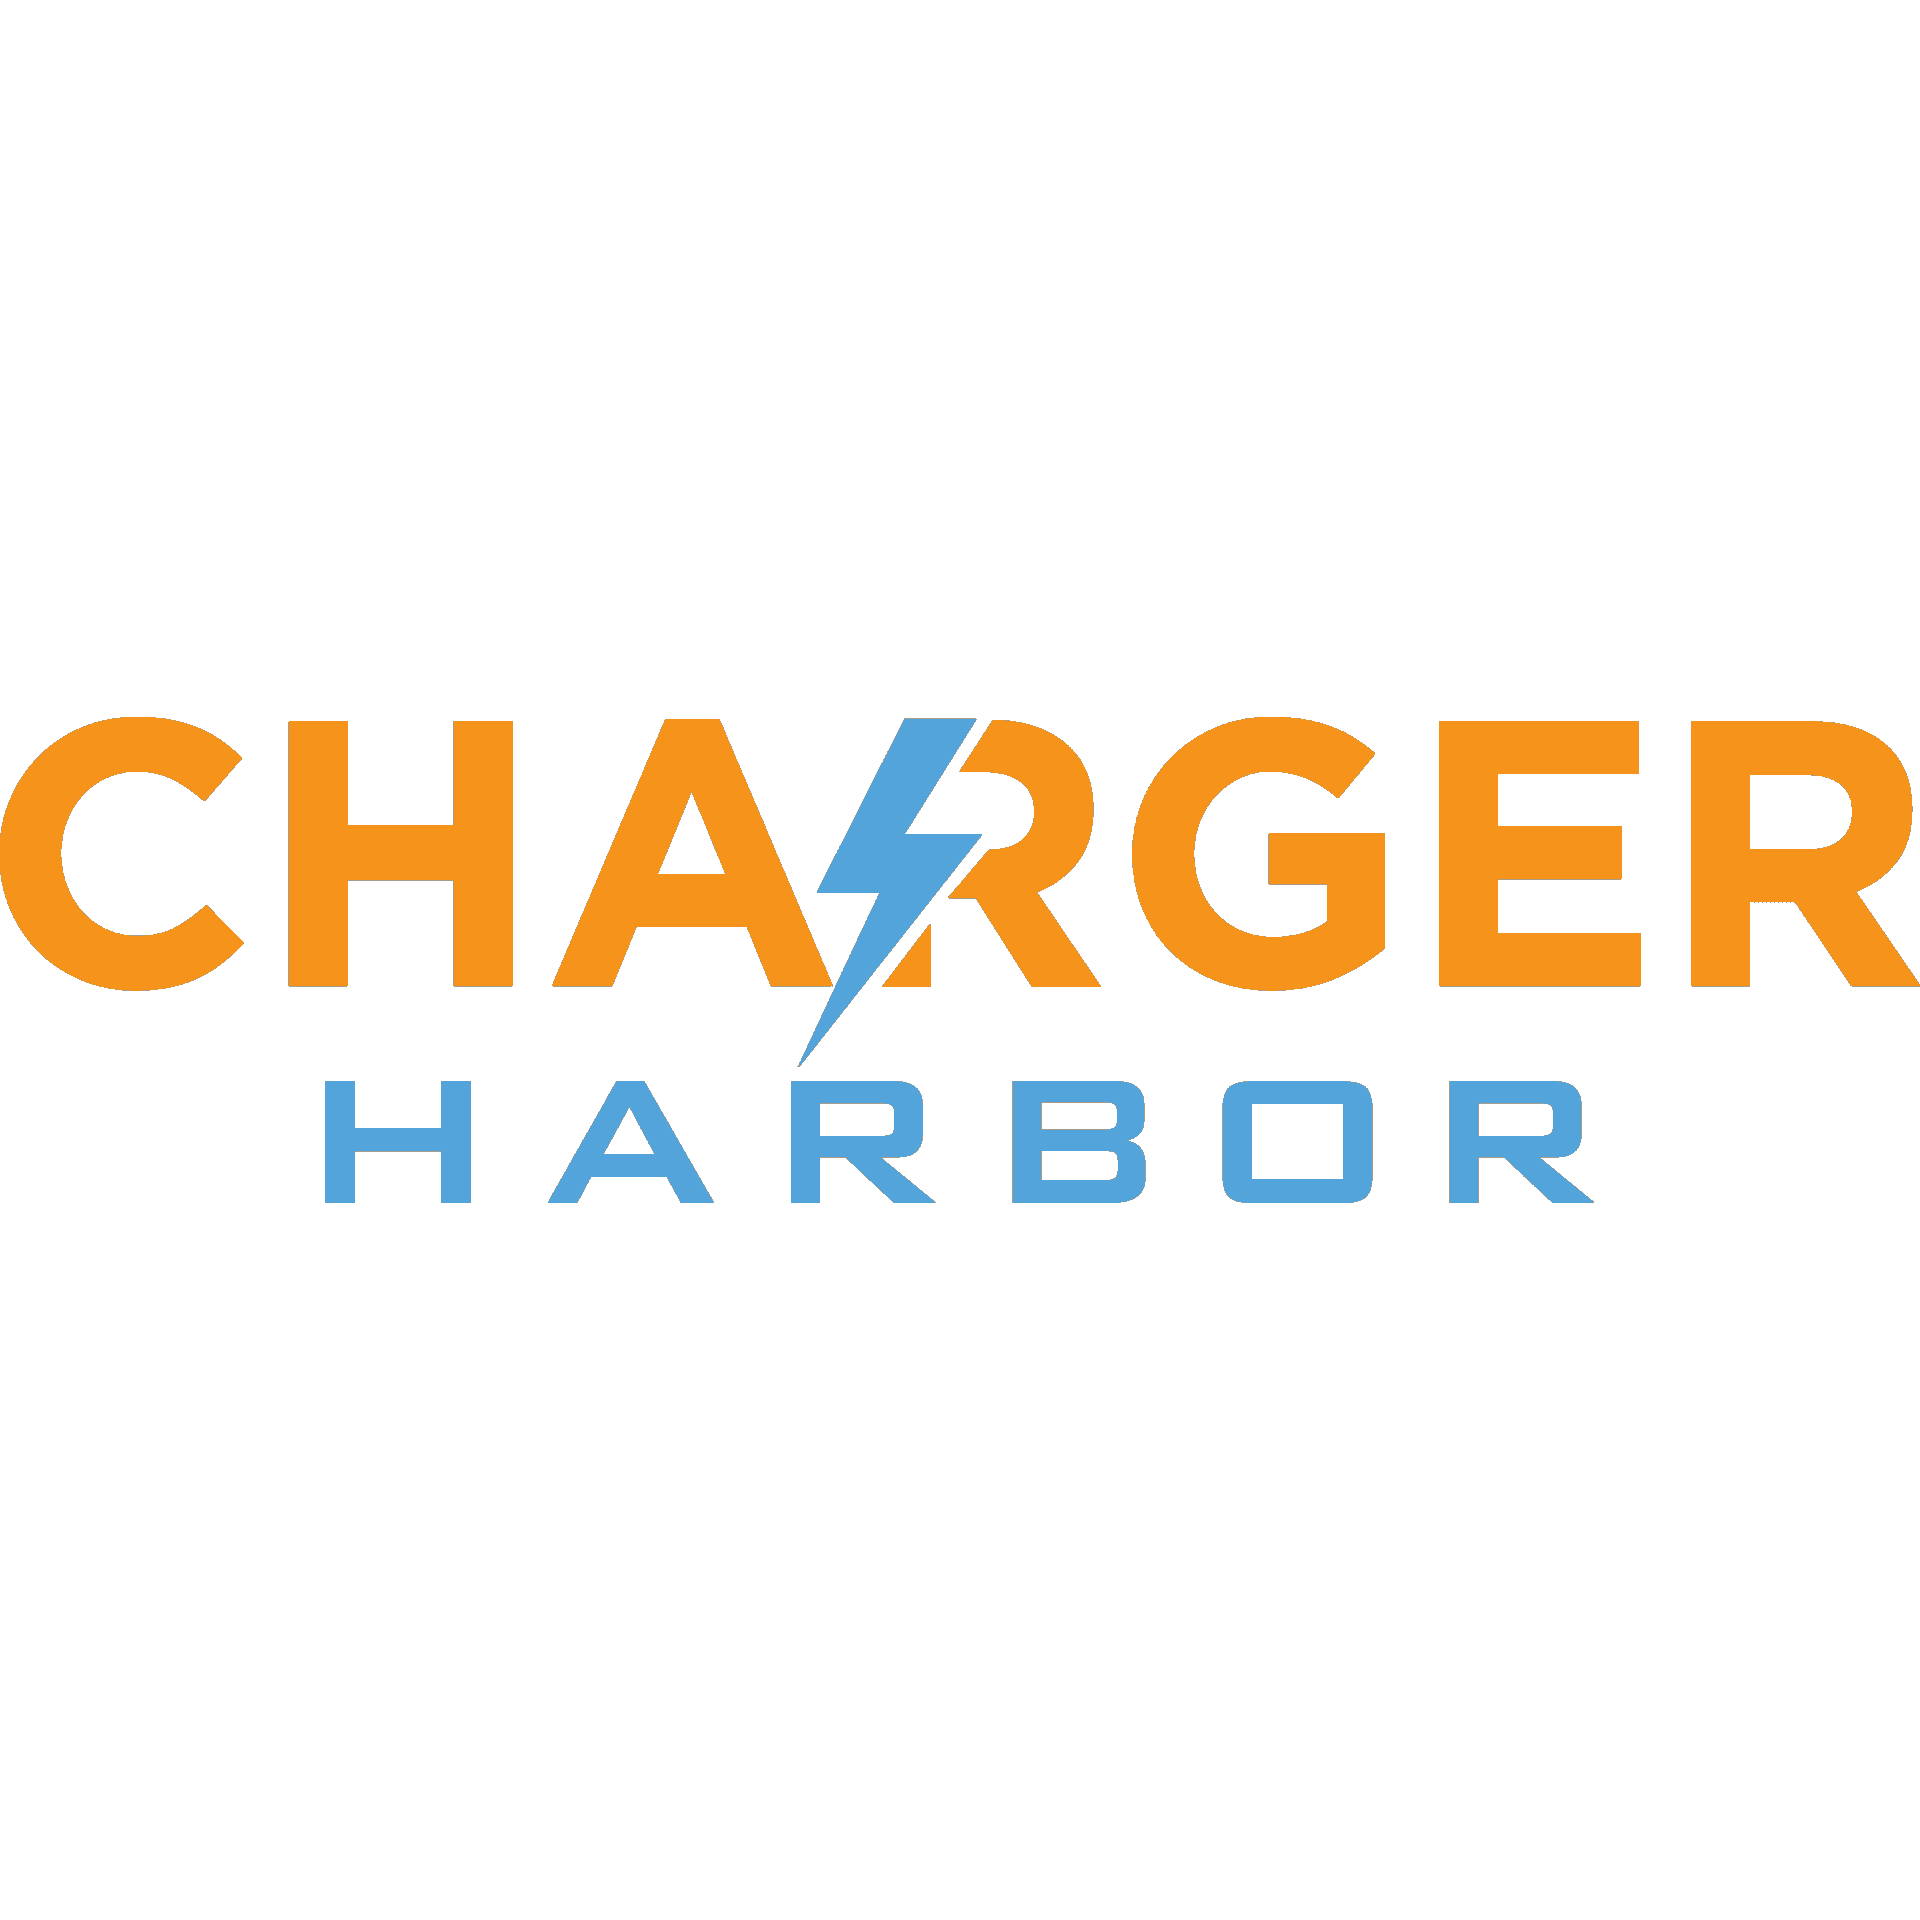 db051156f246dbc6c61ecc263a6069ae.cropped Charger Harbor Logo 2021 w293 5e11ead7 9120 49a3 aa6f 834f5c3acea9